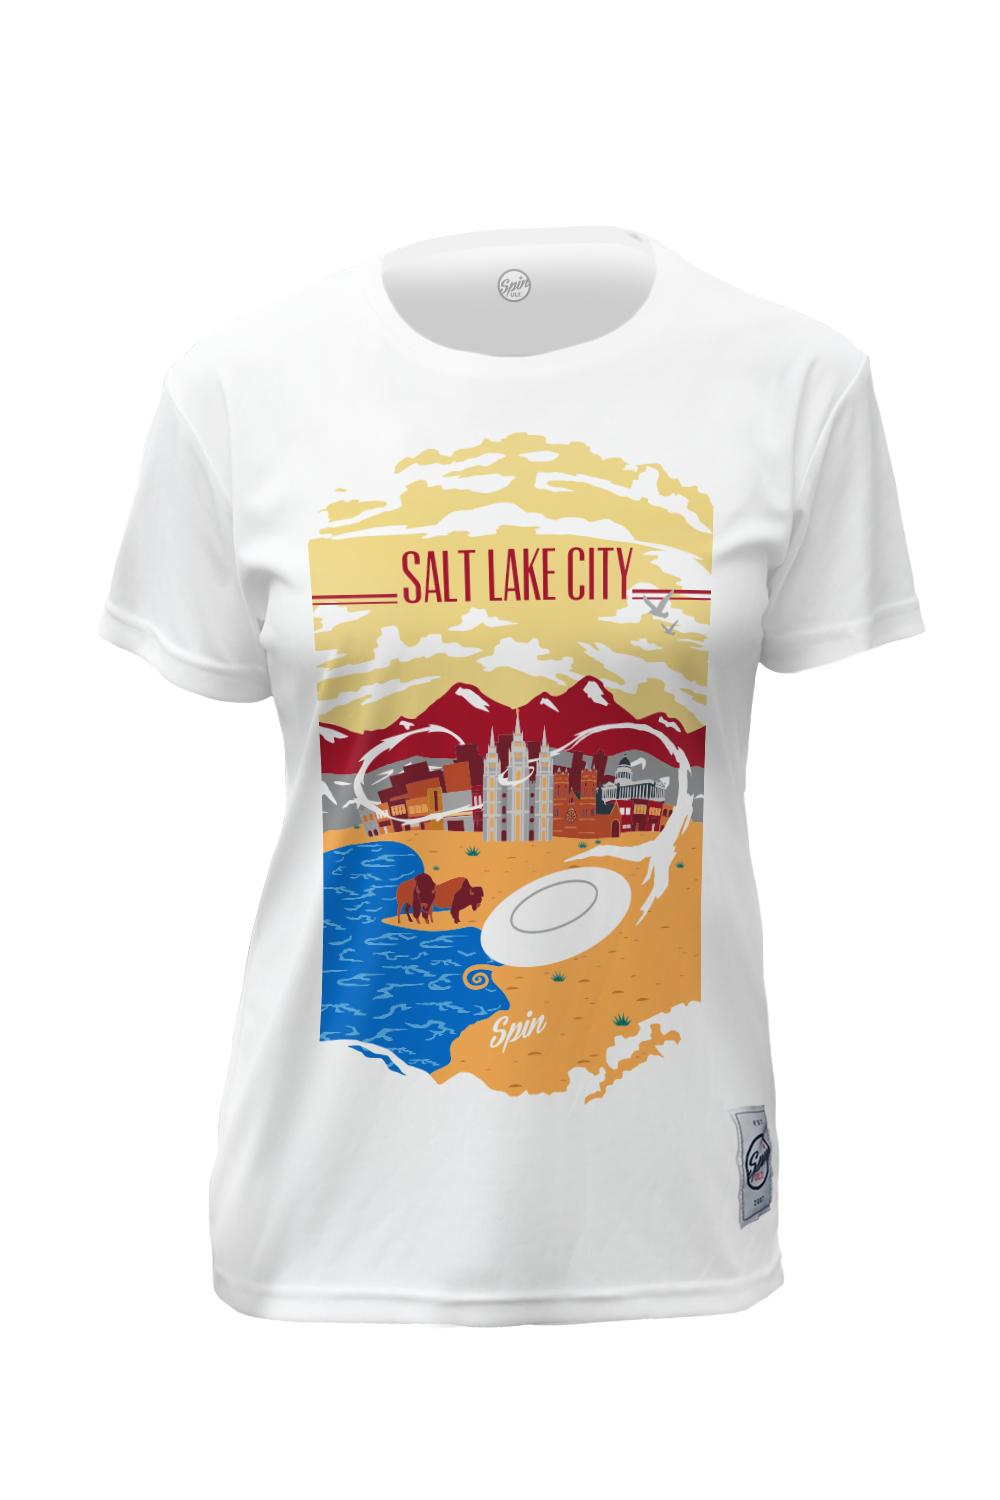 Salt Lake City Short Sleeve Jersey